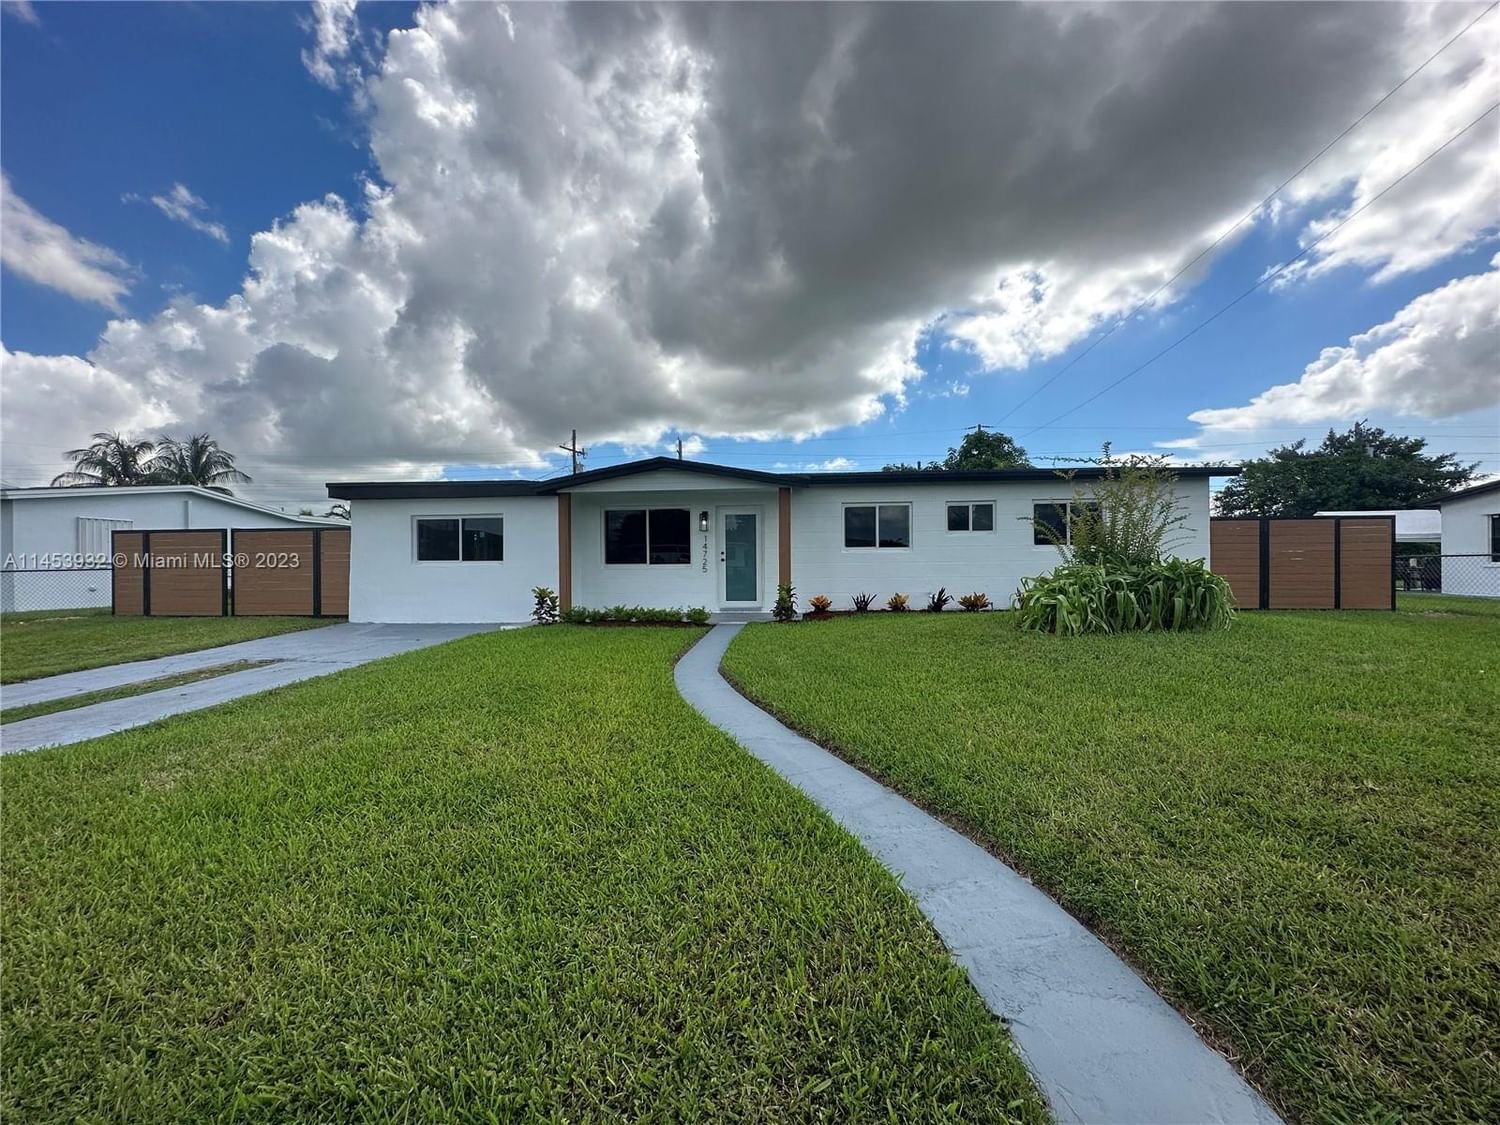 Real estate property located at 14725 107th Ave, Miami-Dade County, Miami, FL